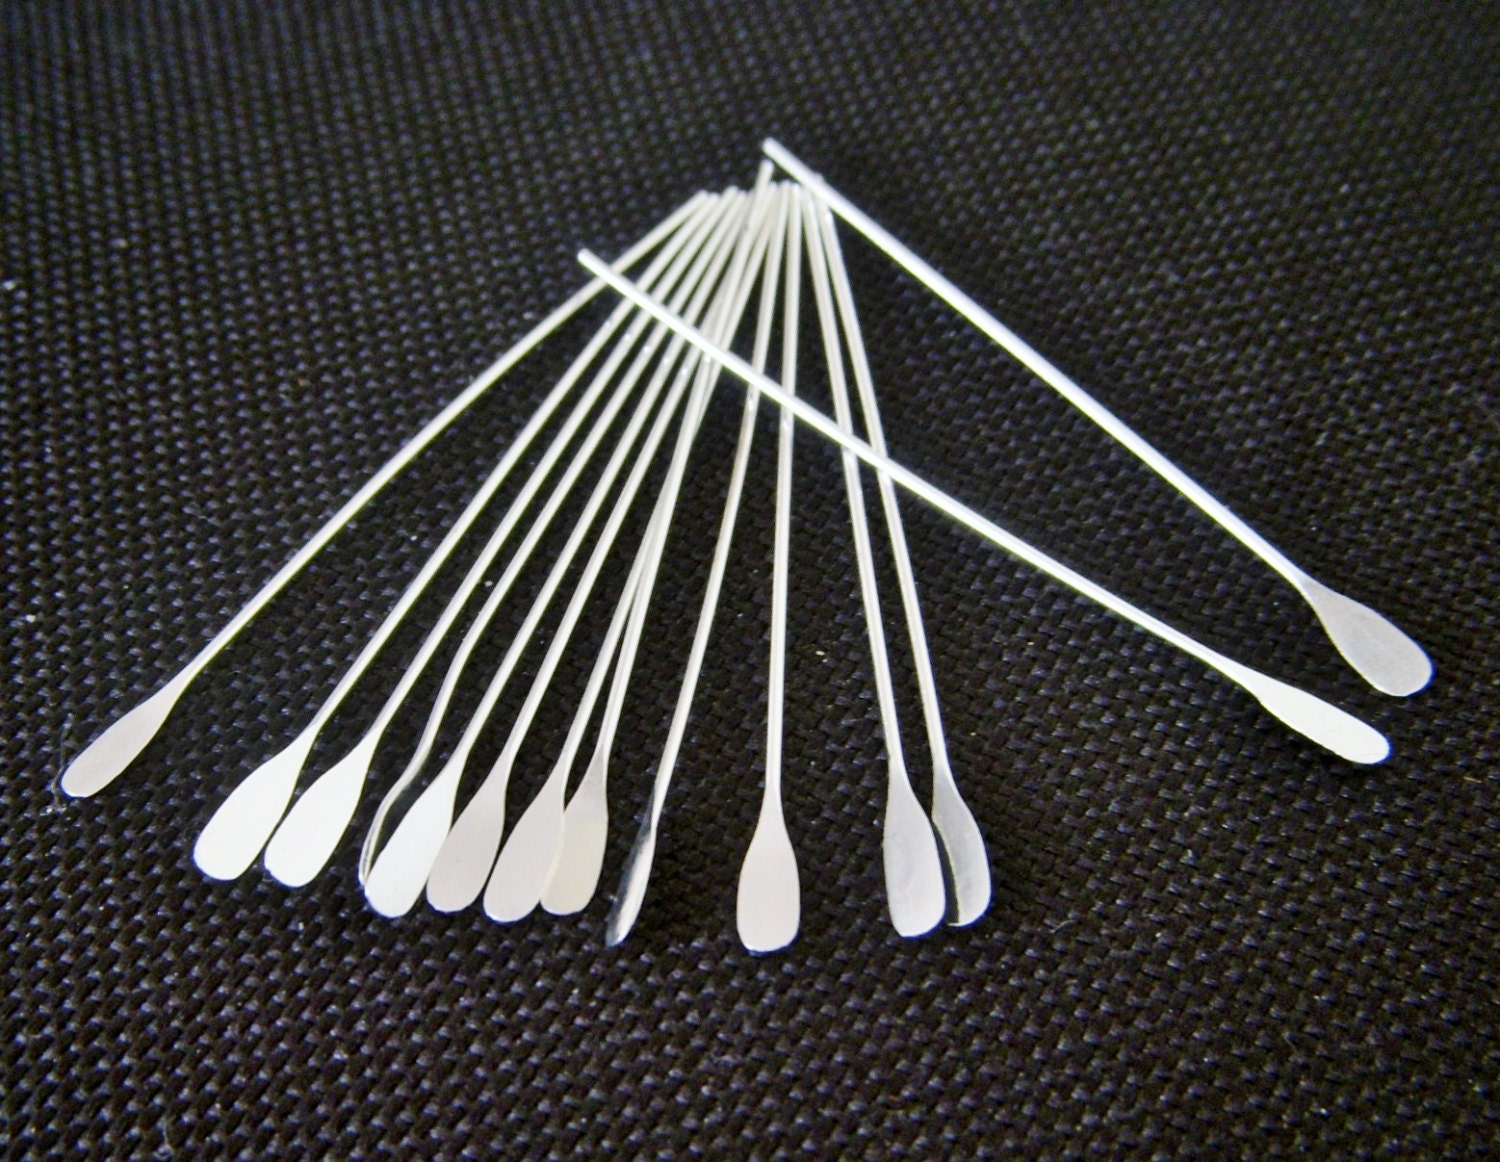 wholesale head pins